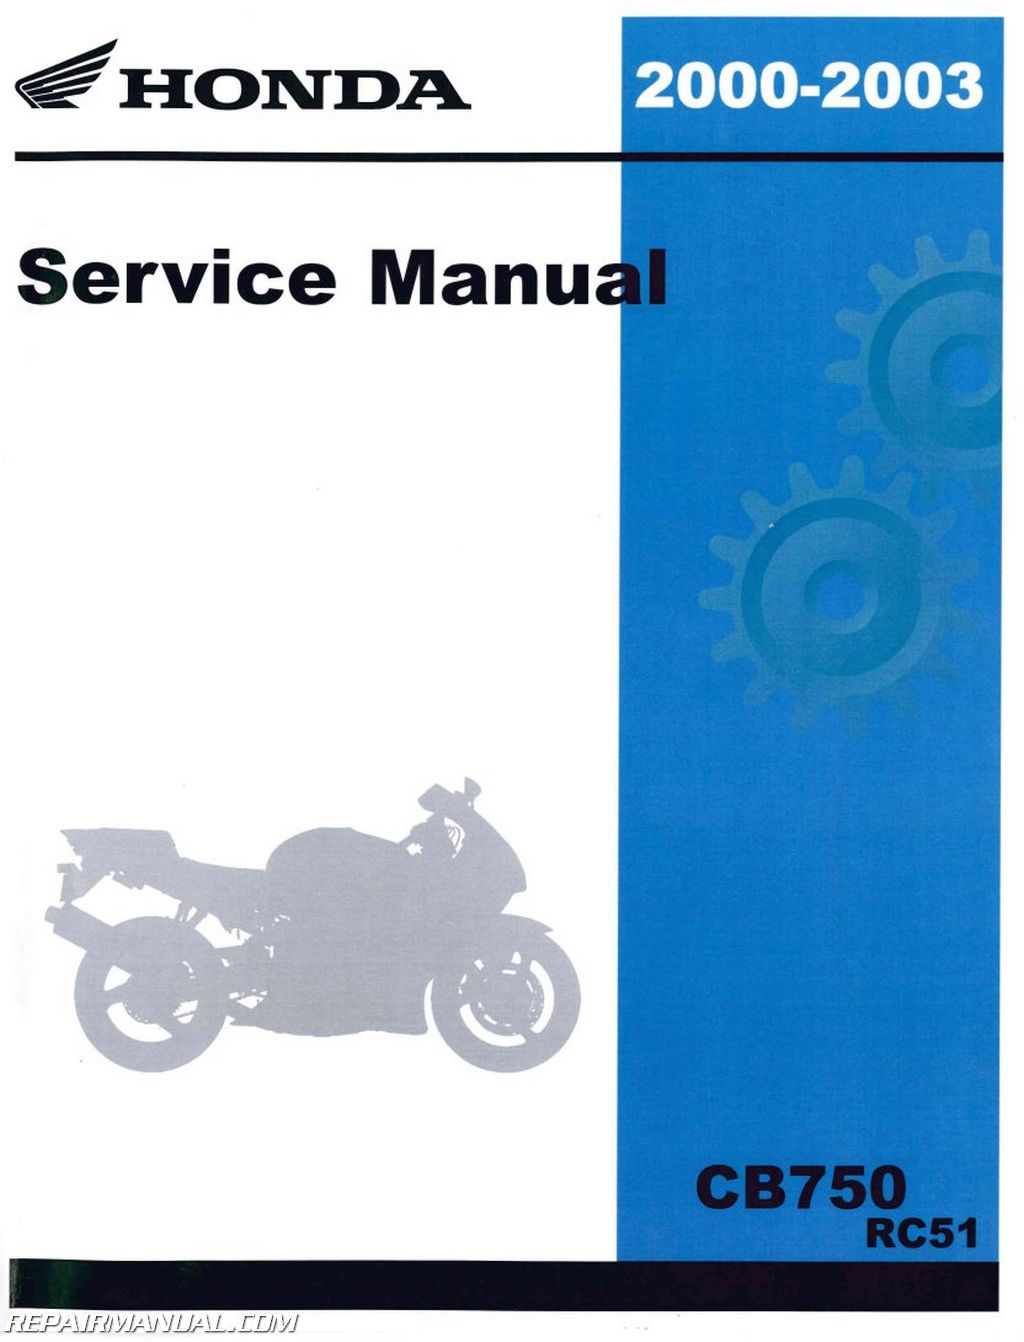 Honda Cb750 Service Manual Free Download